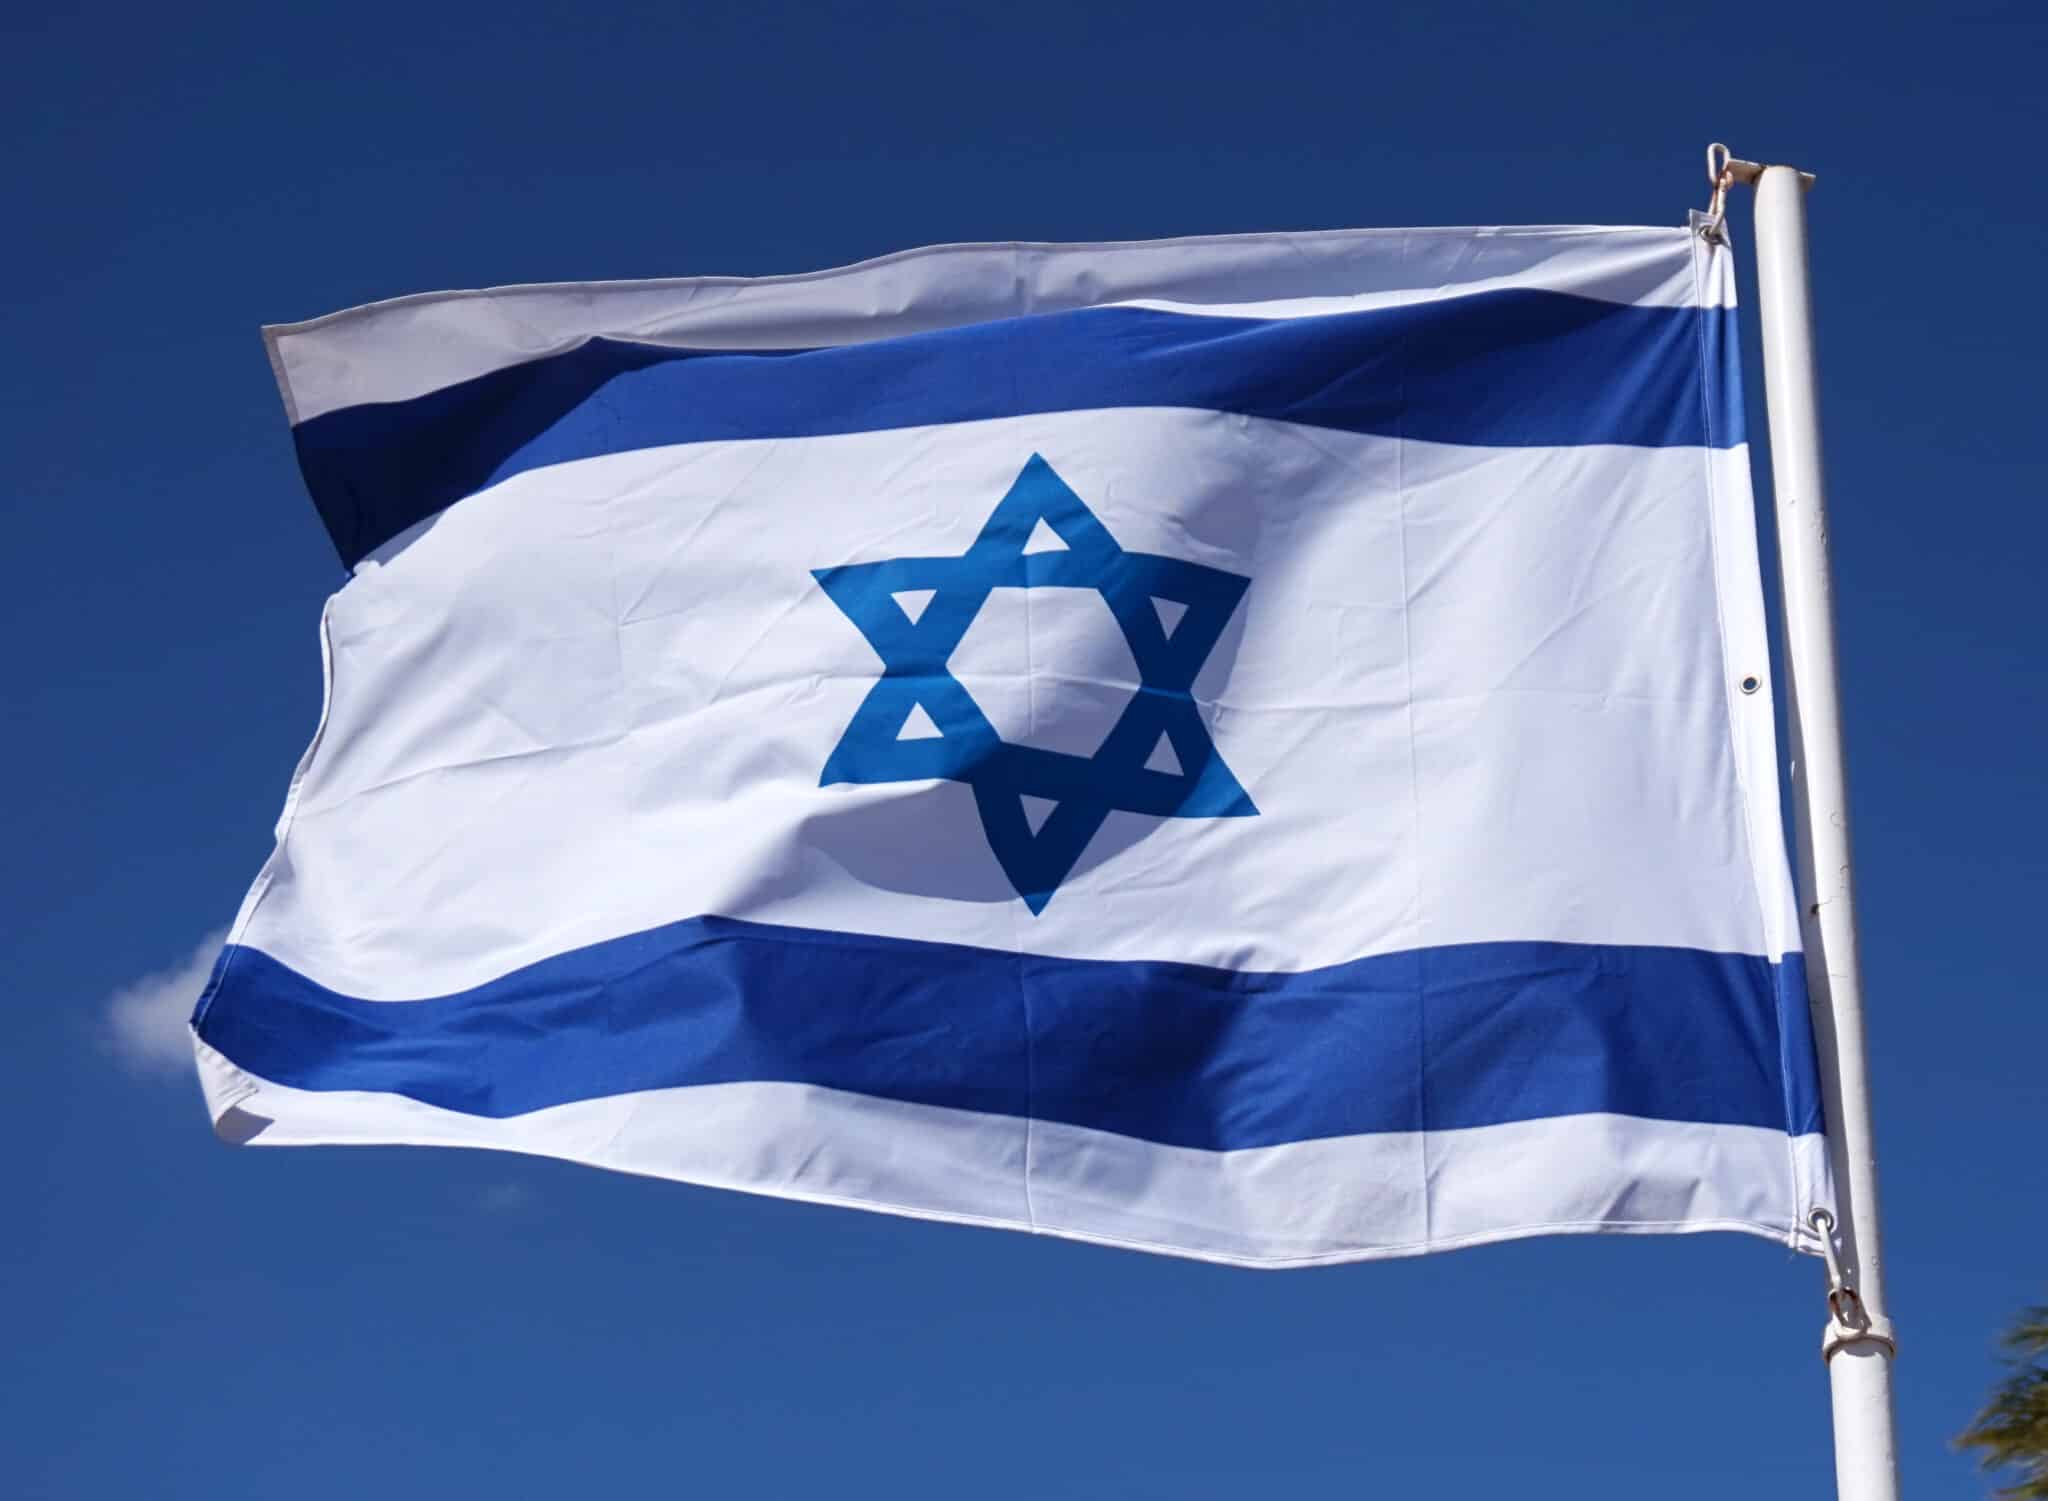 How to celebrate Yom Haatzmaut (Israel Independence Day)